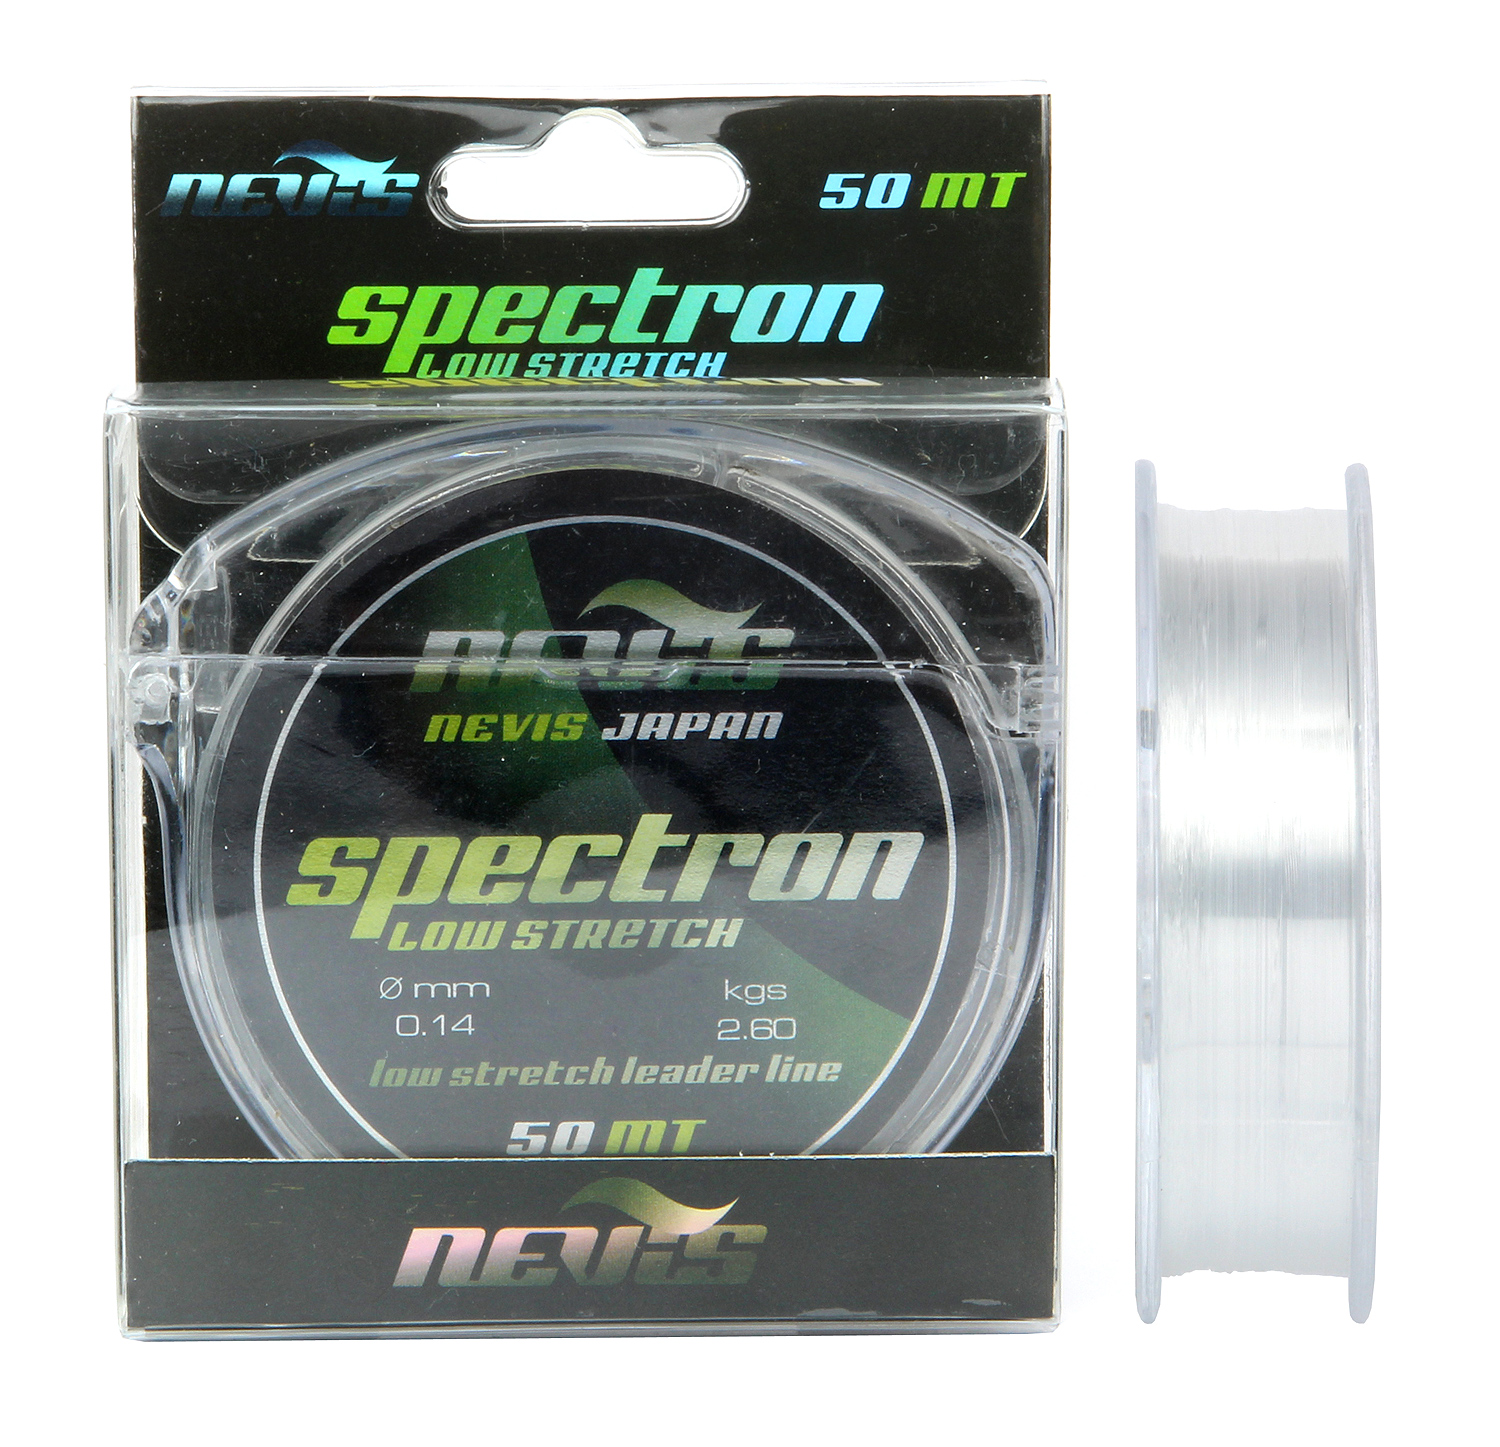 Spectron 50m/0.14mm